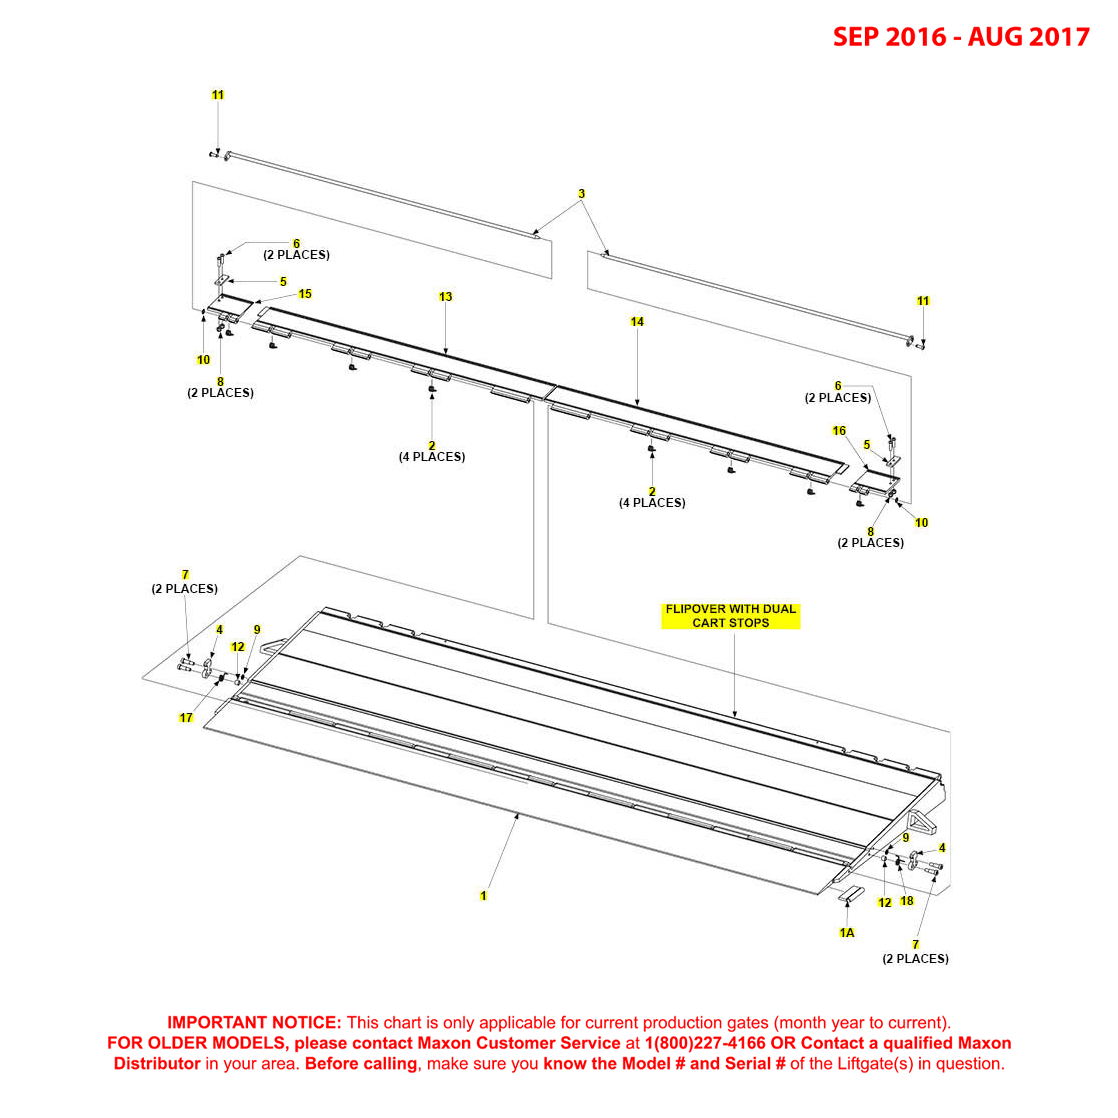 Maxon GPT (Sep 2016 - Aug 2017) Flipover With Dual Cart Stops Diagram